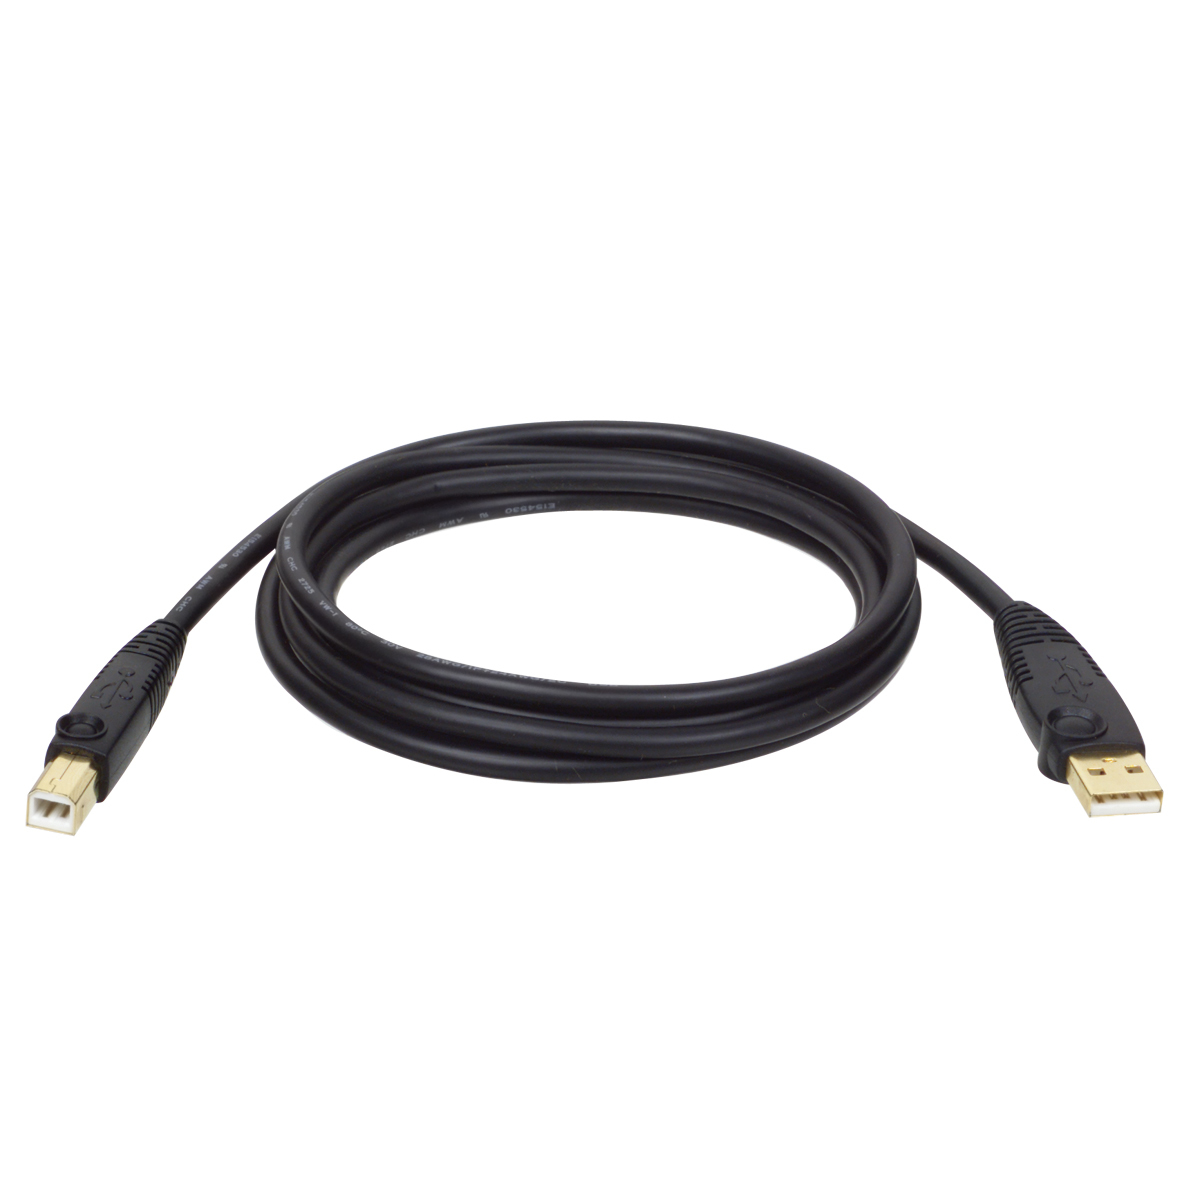 Cable Usb 2.0 Tripp Lite Macho 4.57M Negro U022-015